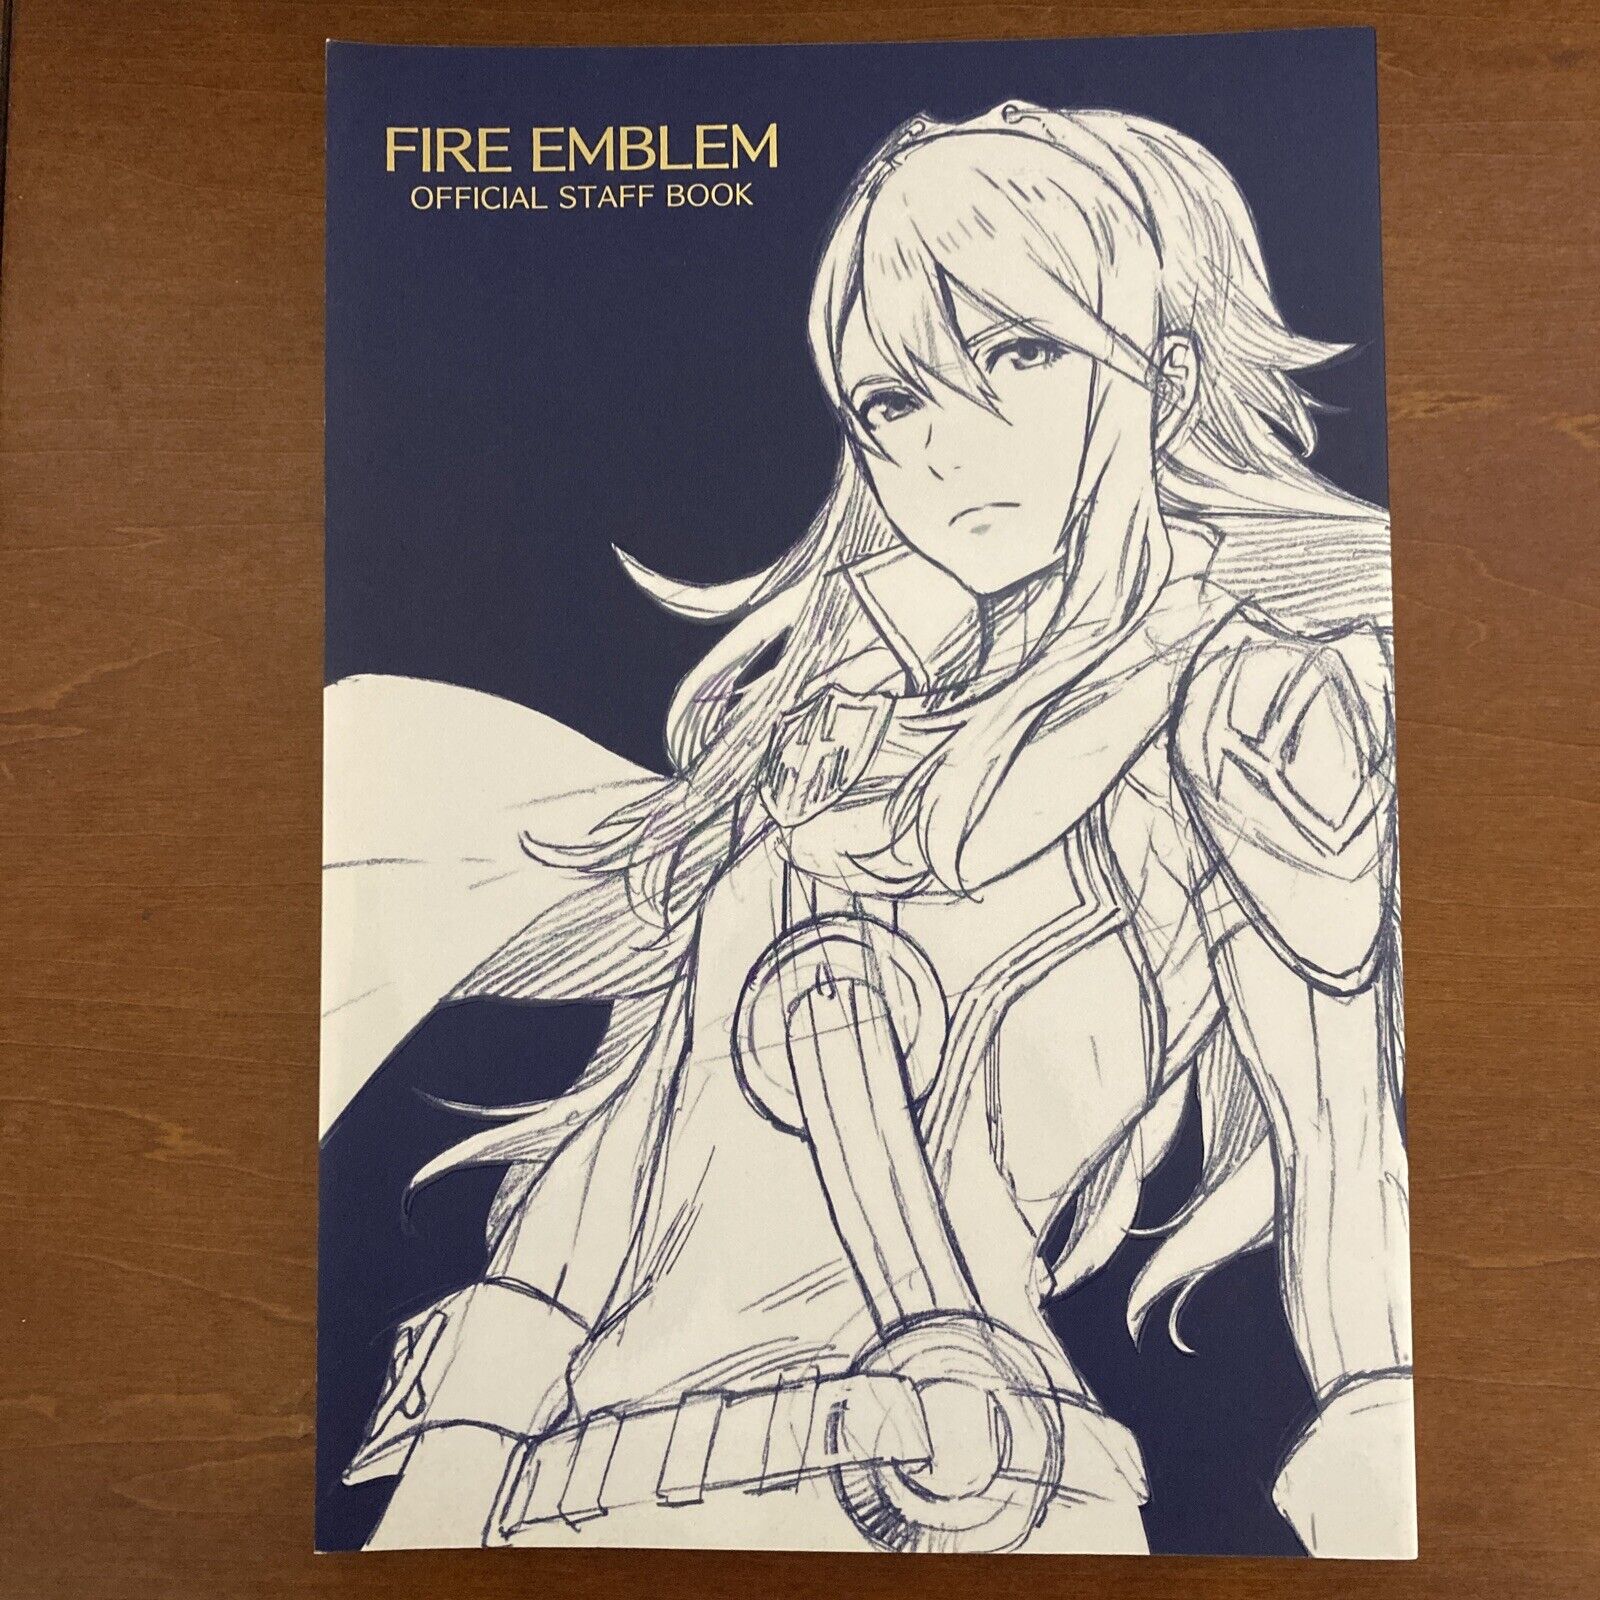 Fire Emblem Official Staff Book 25th Anniversary Art Book Illustration